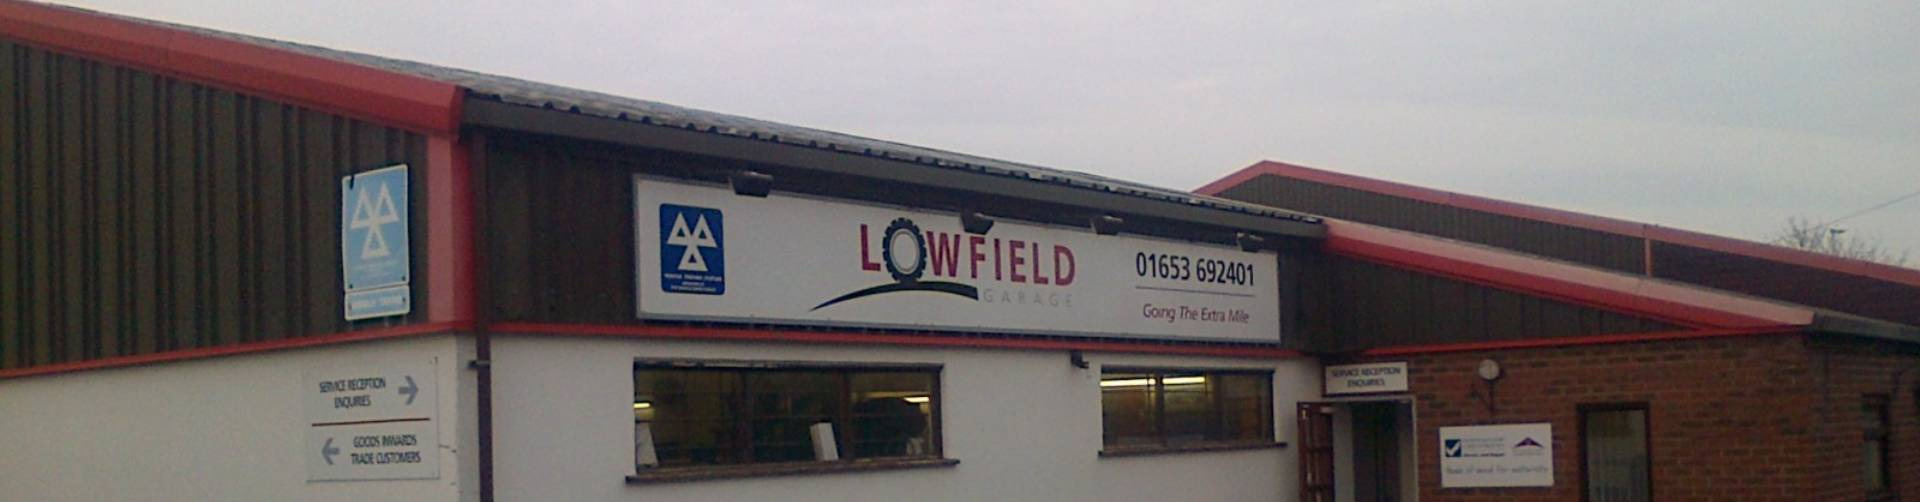 About Us at Lowfield Garage Ltd, Malton